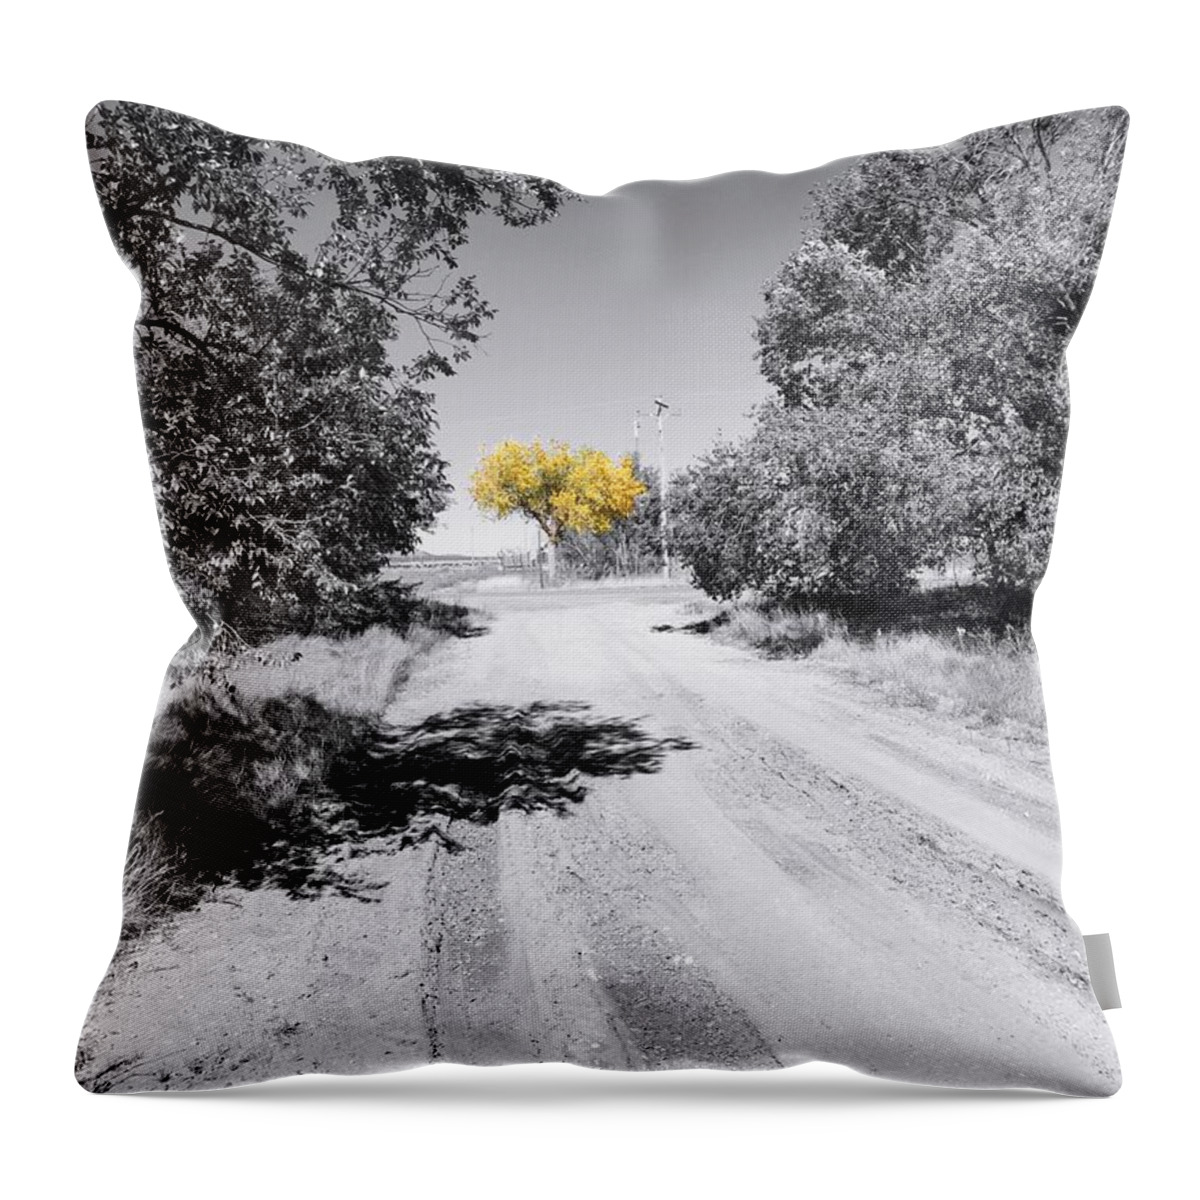 Autumn Throw Pillow featuring the photograph Rural Autumn Splash by Brad Hodges